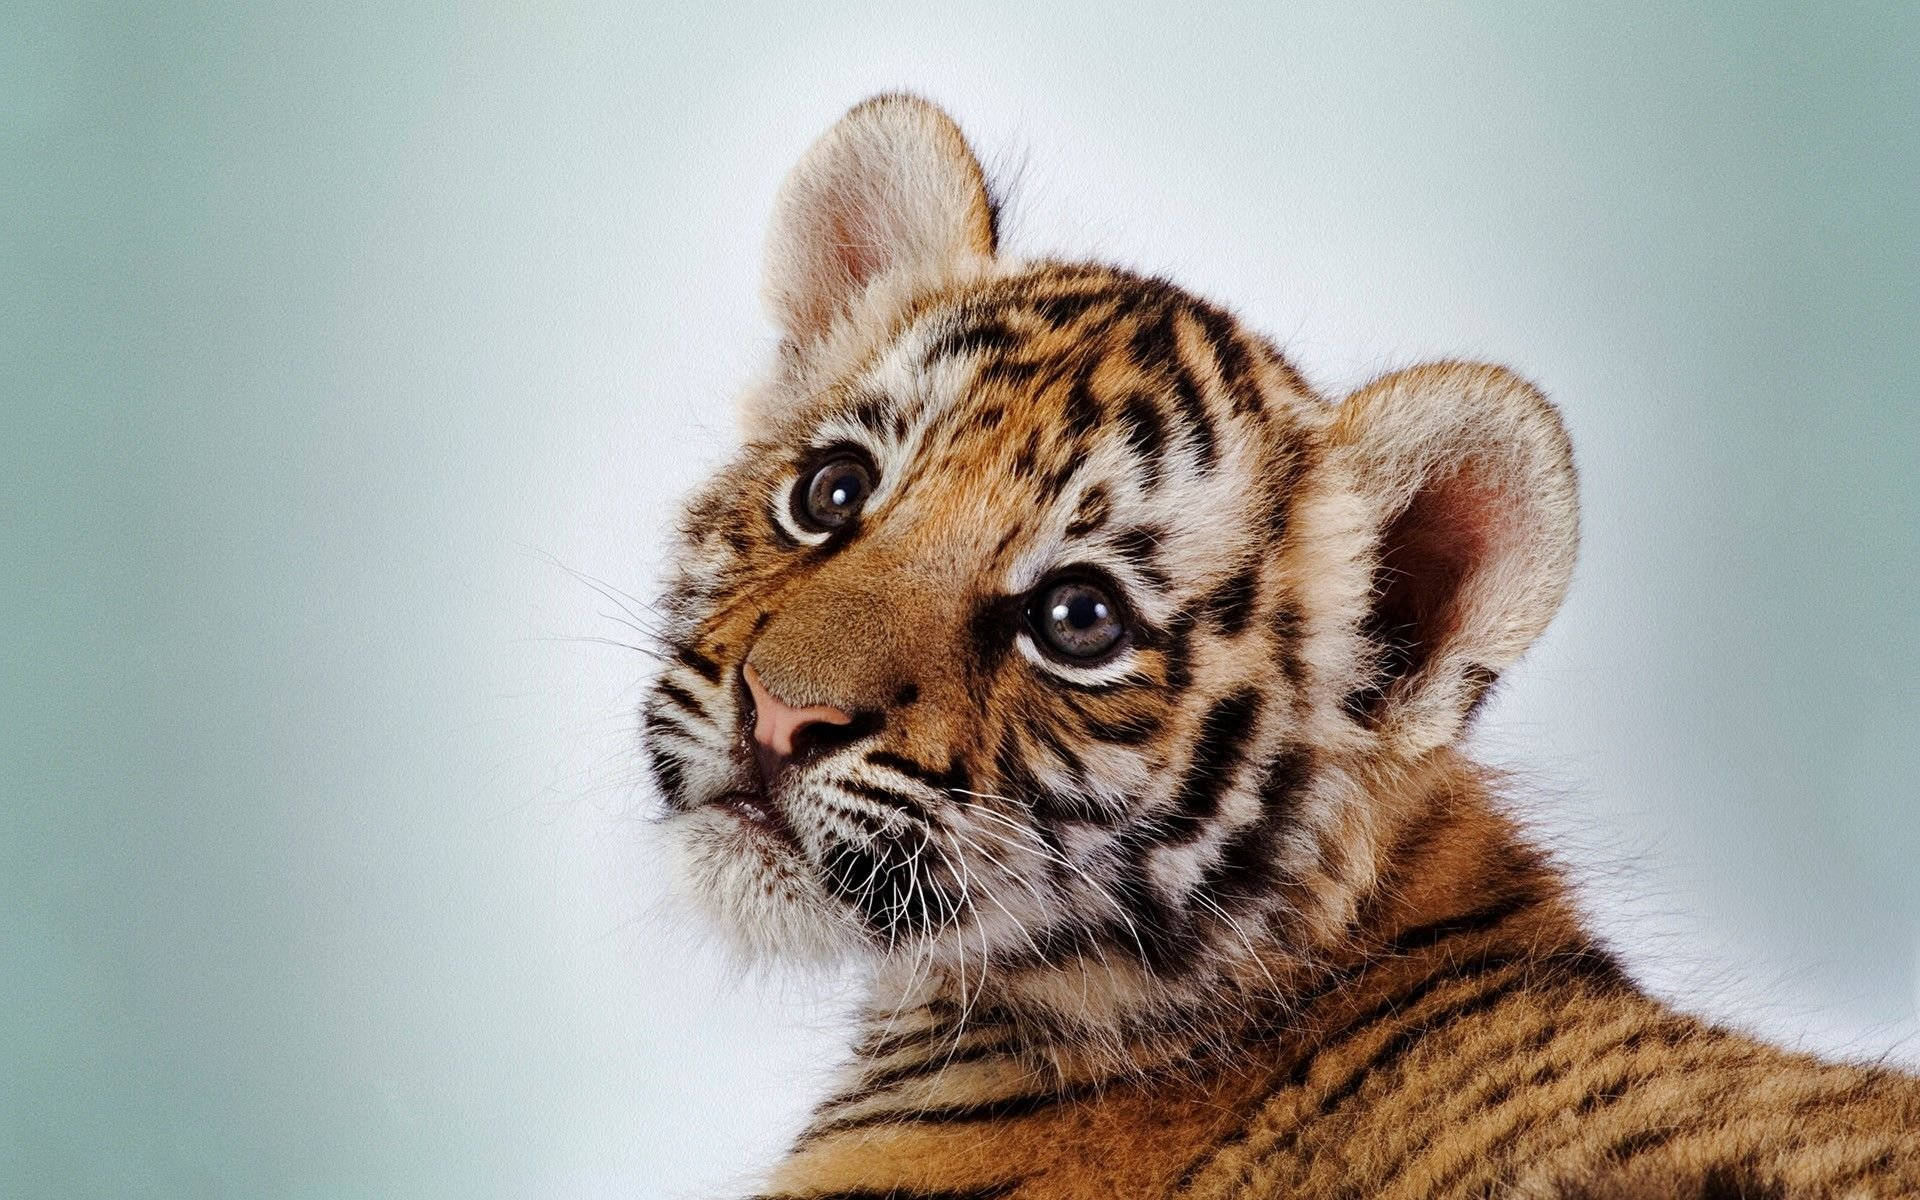 Baby Tiger Adorable Portrait Background